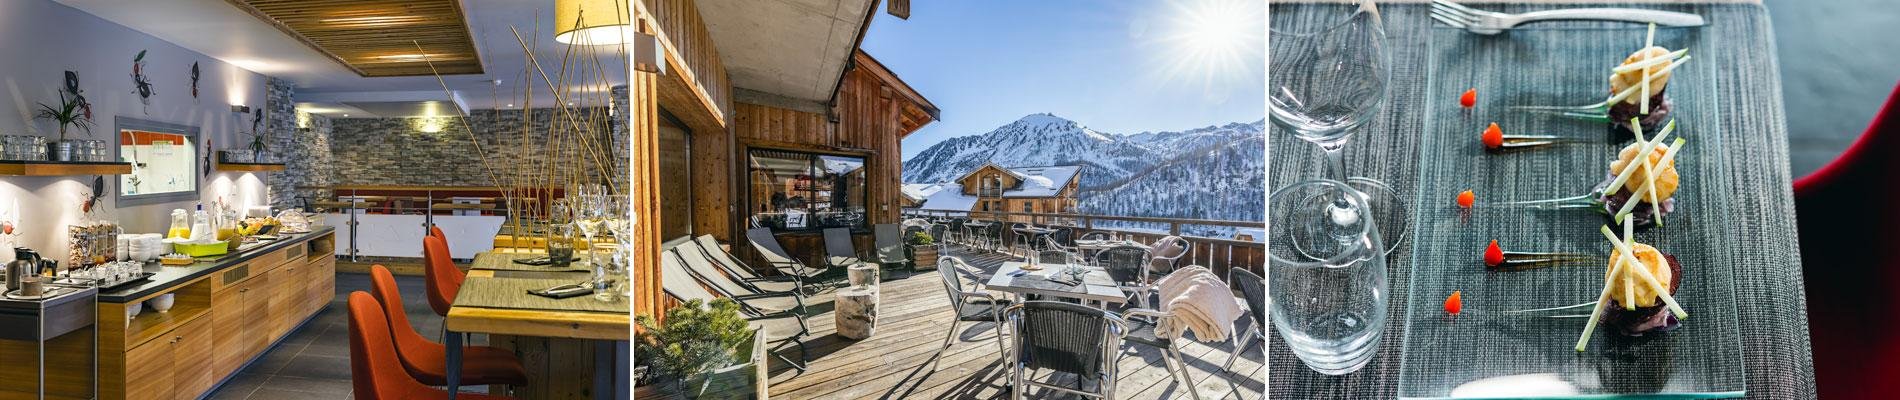 hotel anova montgenevre ski wintersport